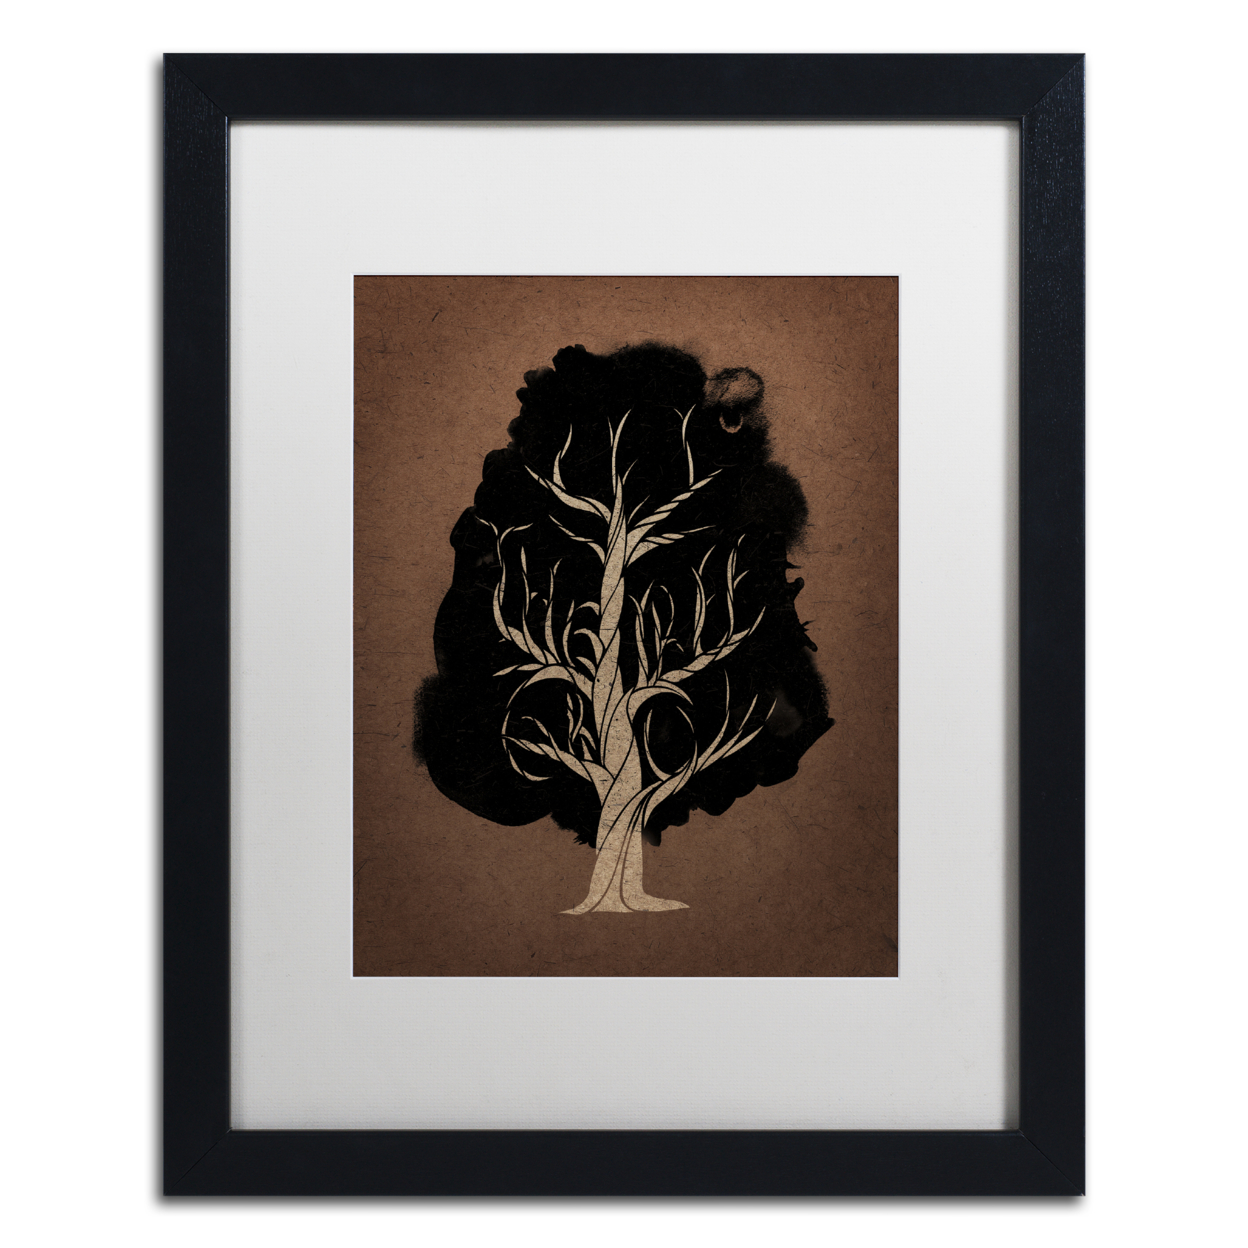 Robert Farkas 'Let The Tree Grow' Black Wooden Framed Art 18 X 22 Inches